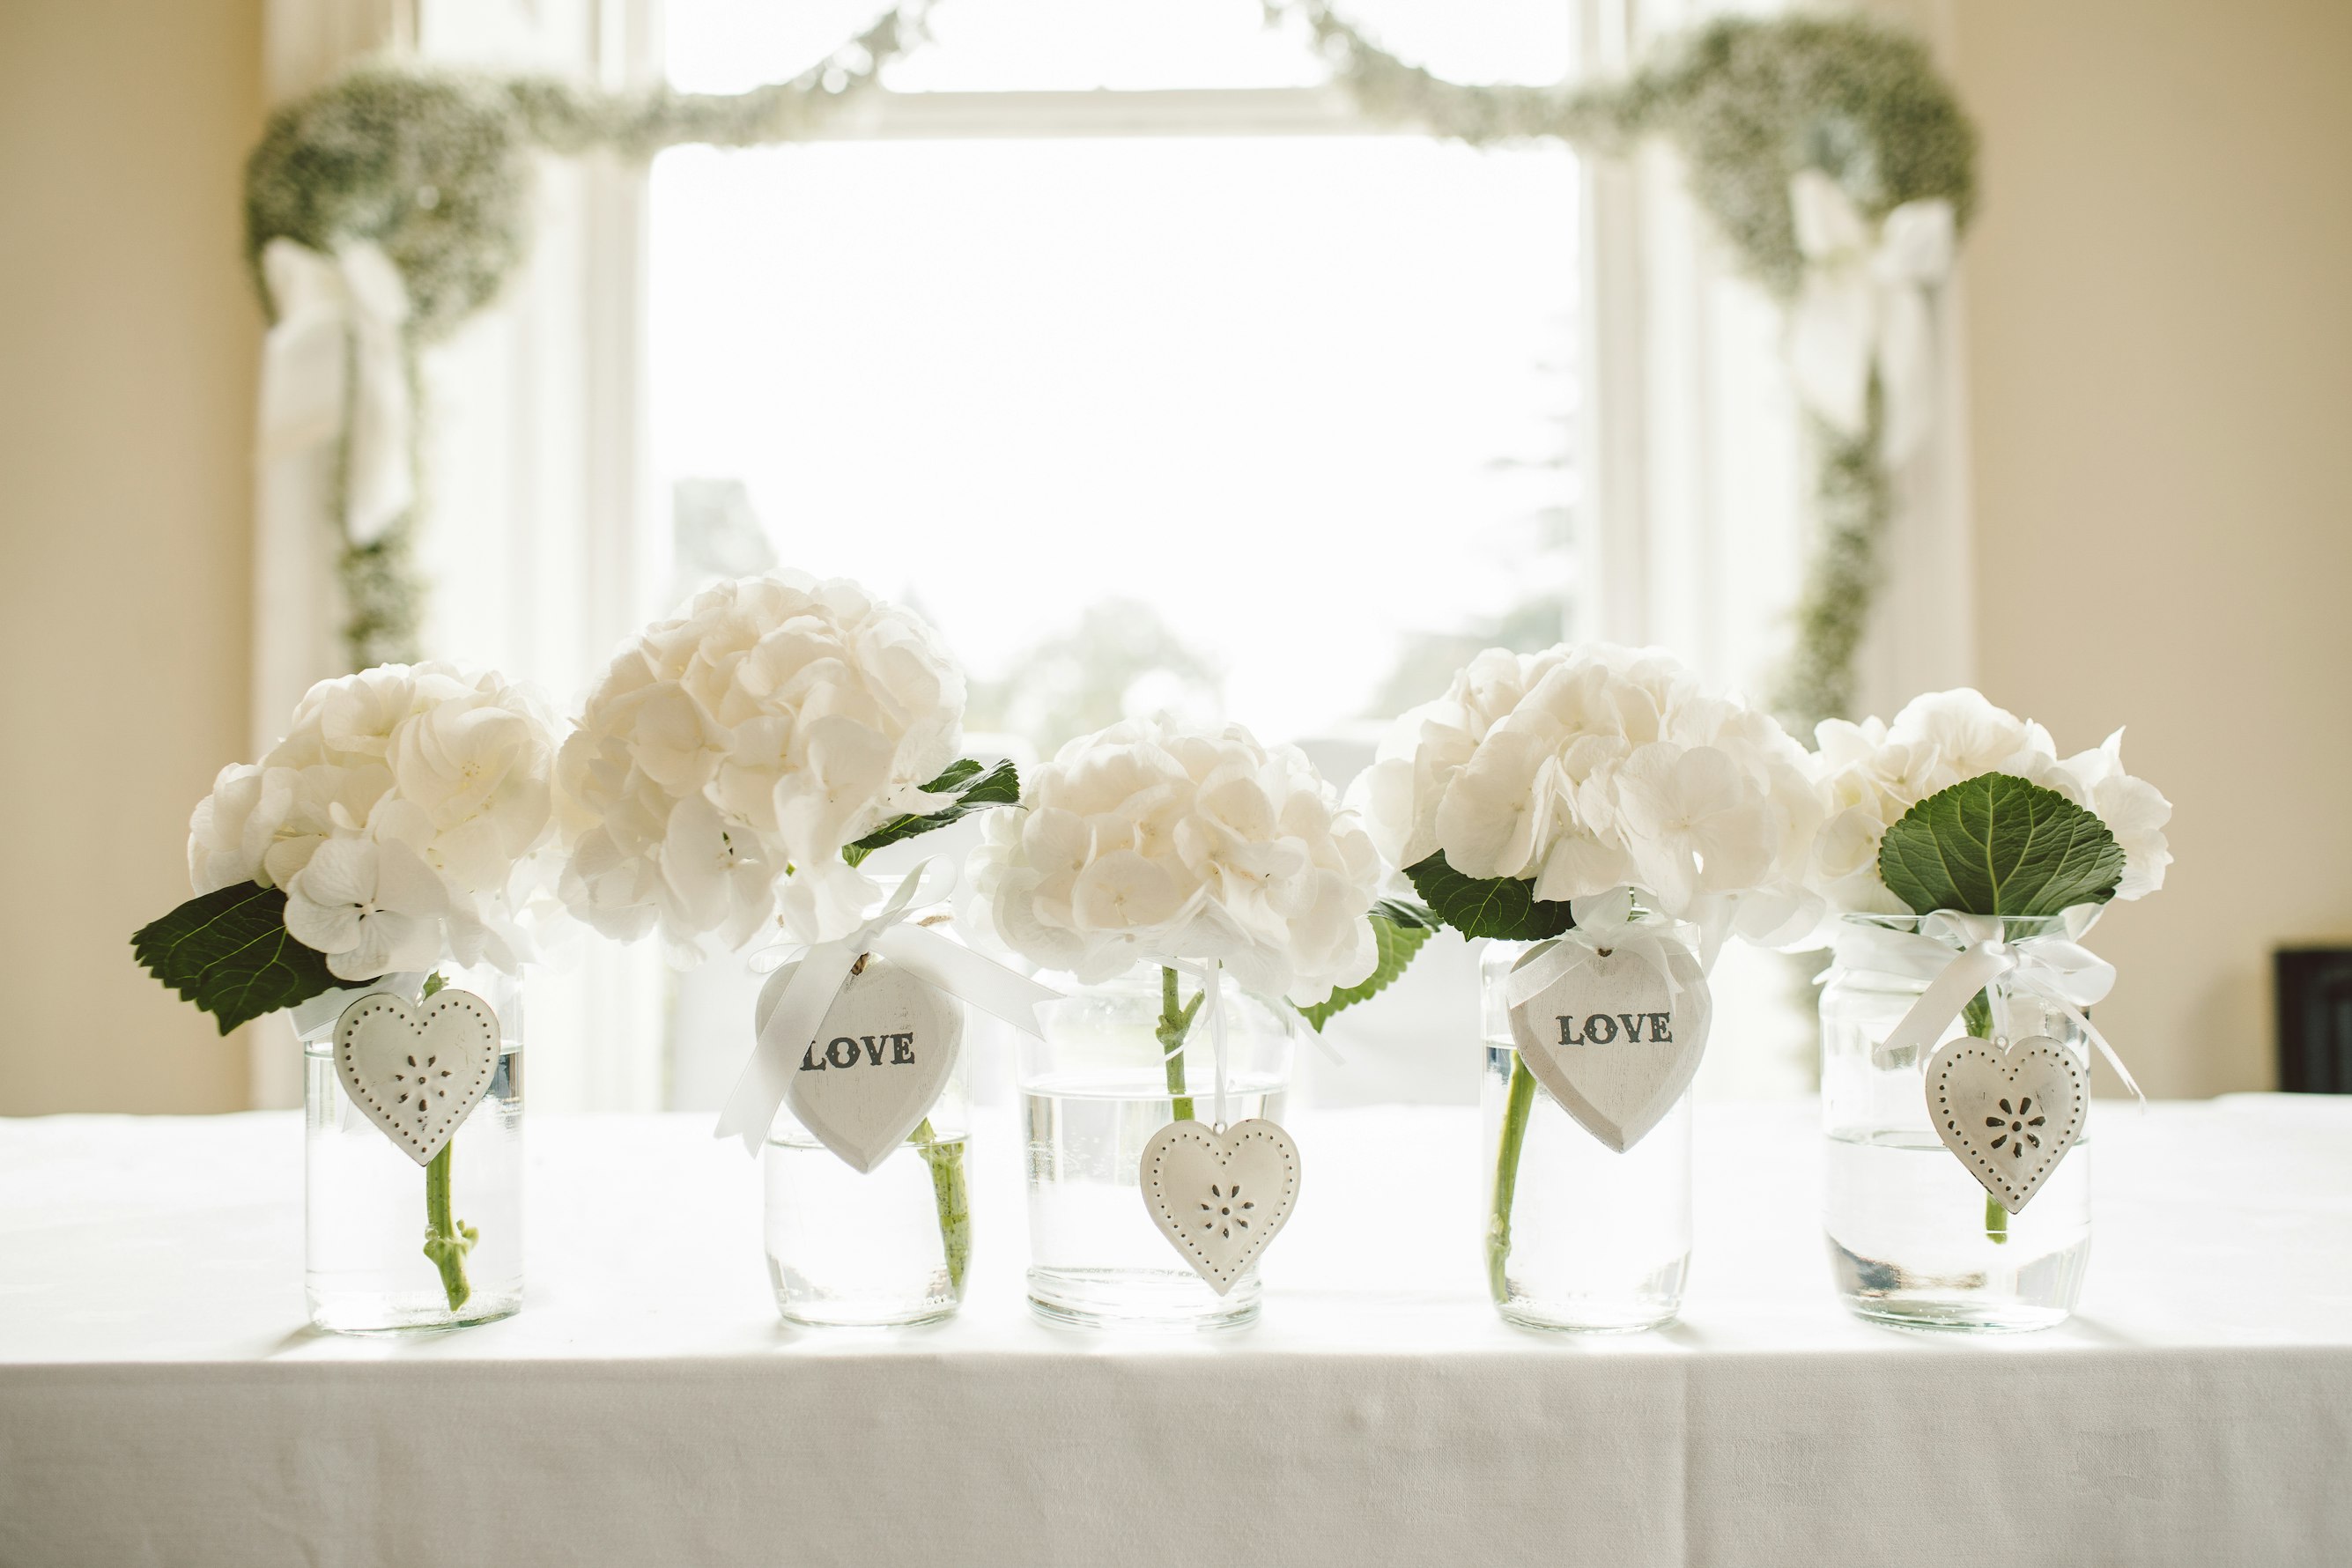 Wedding Decor Ideas to Make Your Day Unforgettable